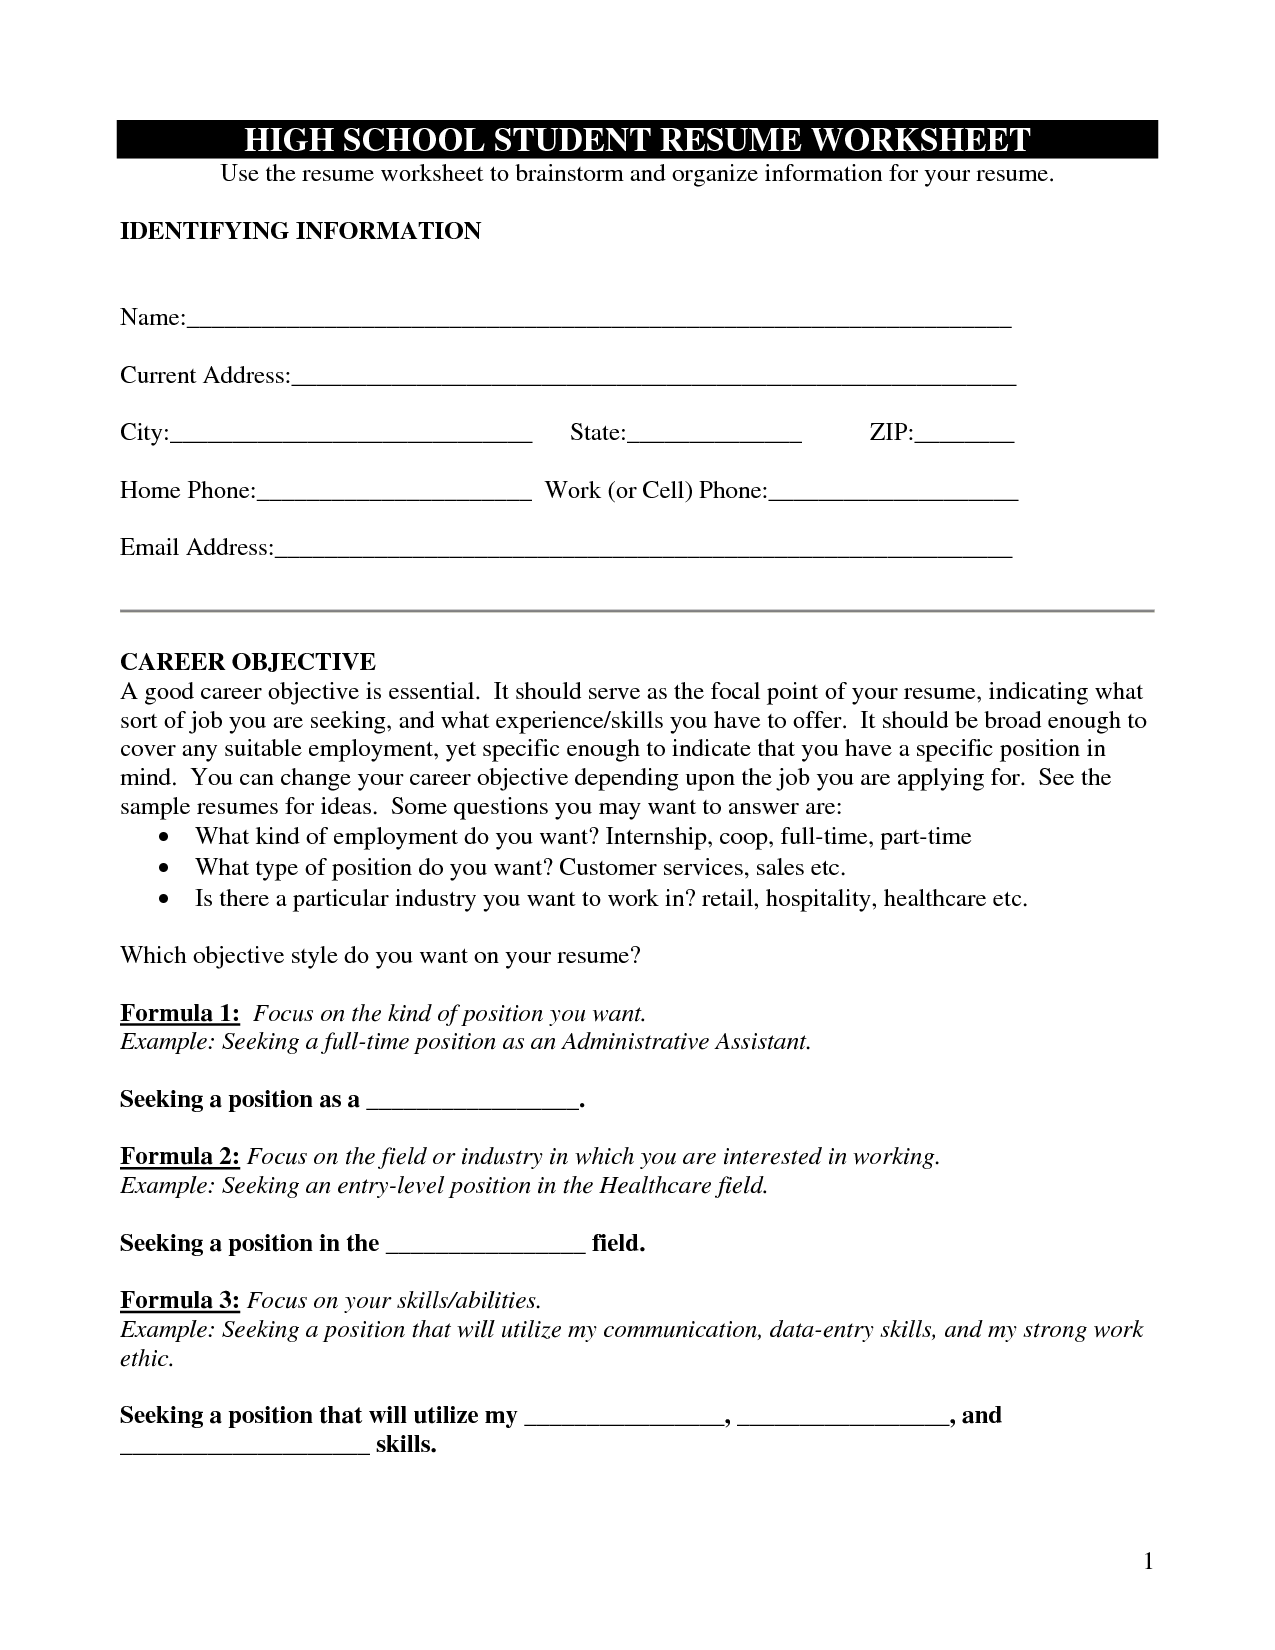 High School Student Resume Worksheet Image